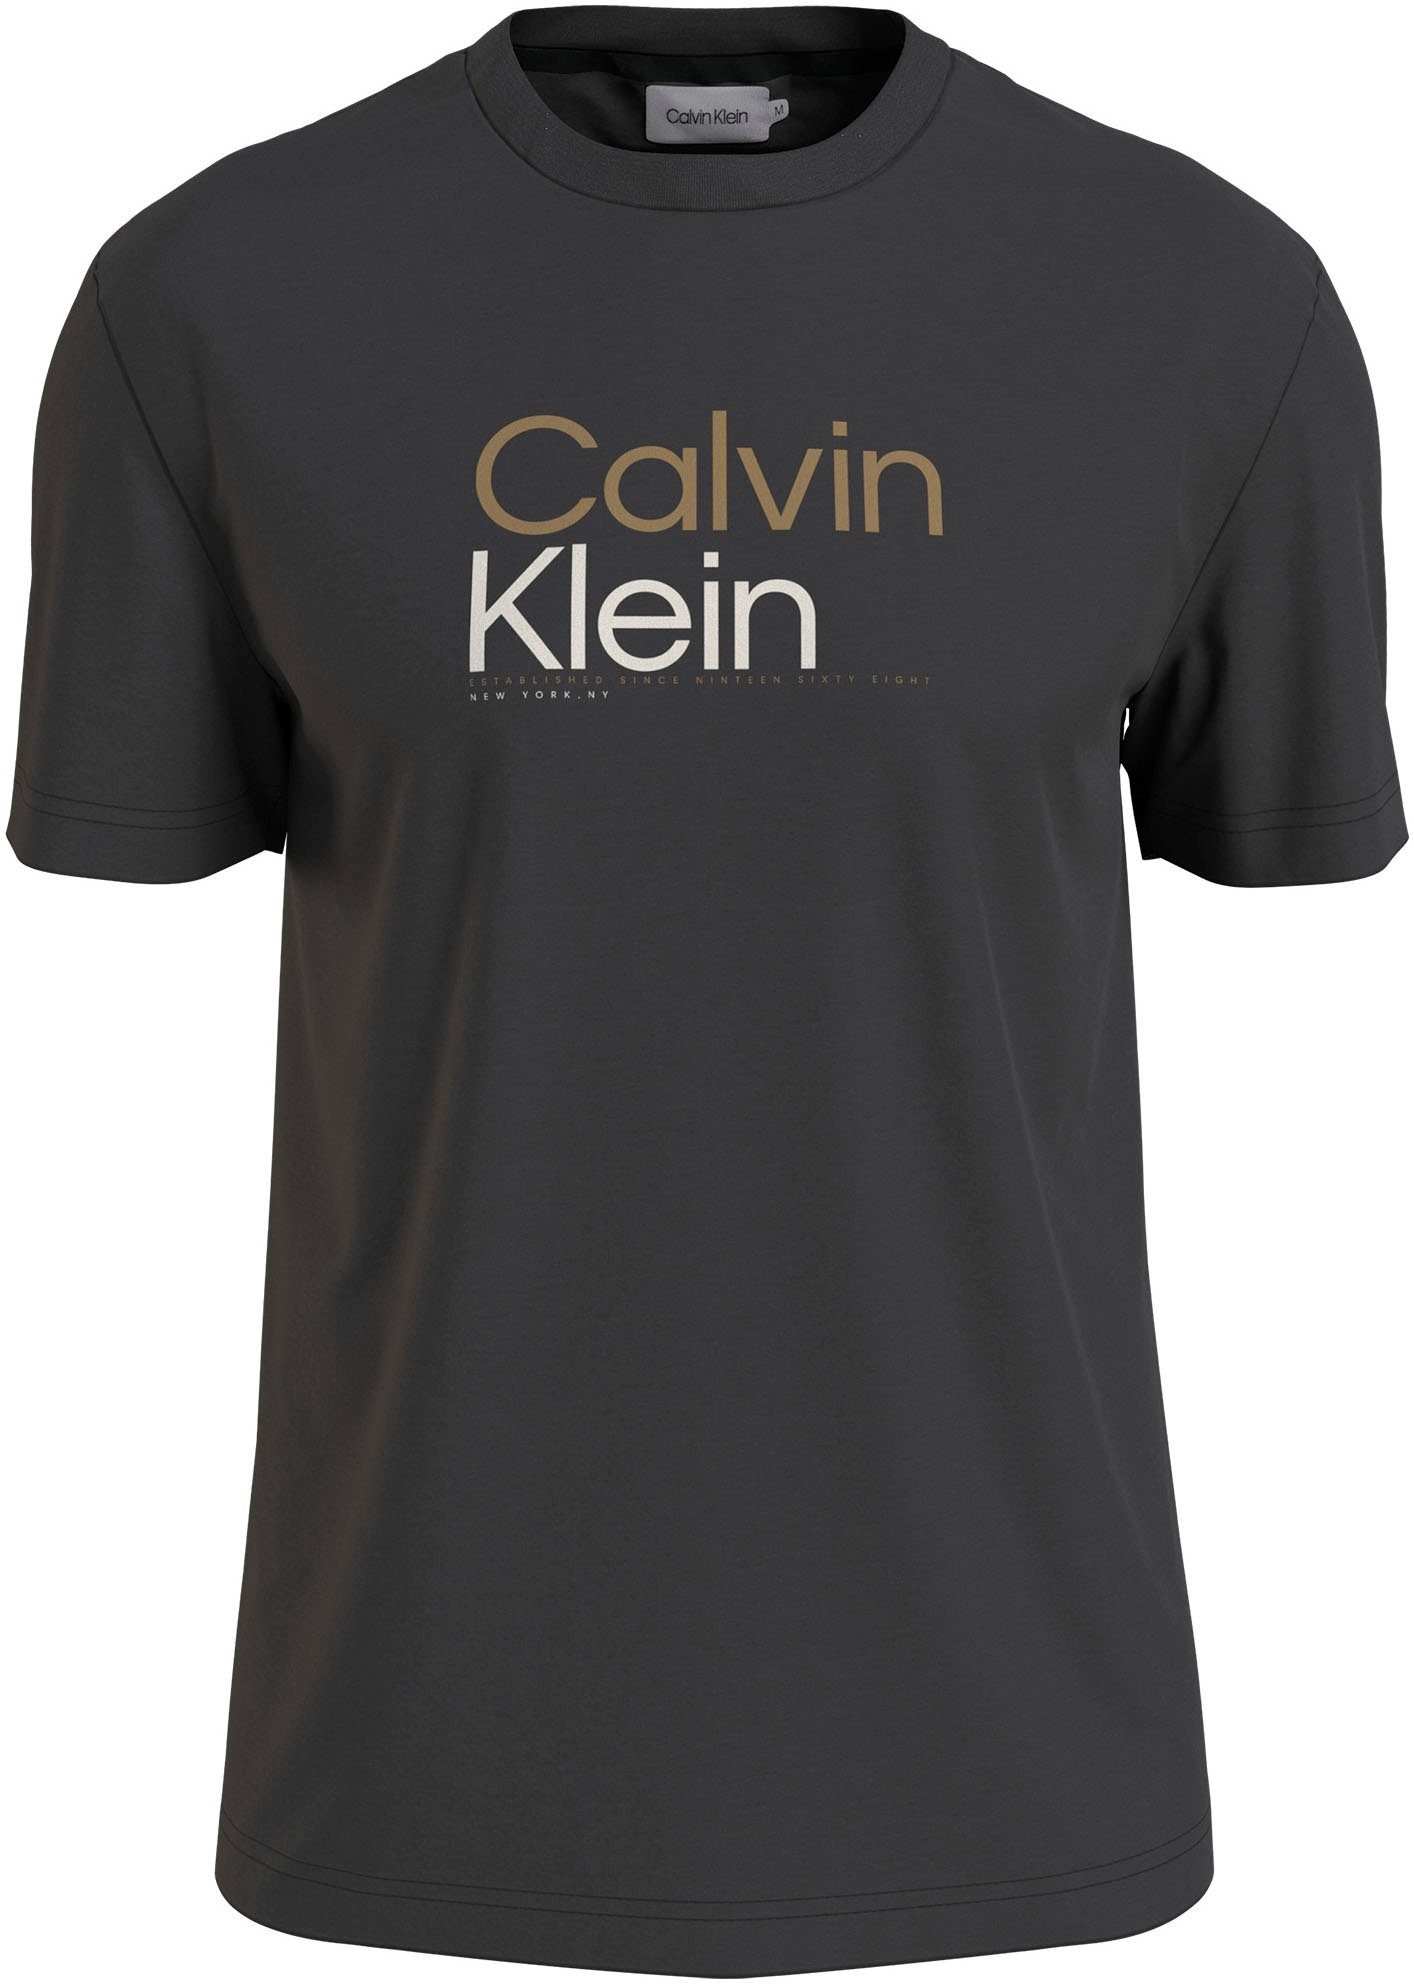 MULTI T-Shirt Markenlabel mit LOGO Calvin Klein COLOR T-SHIRT